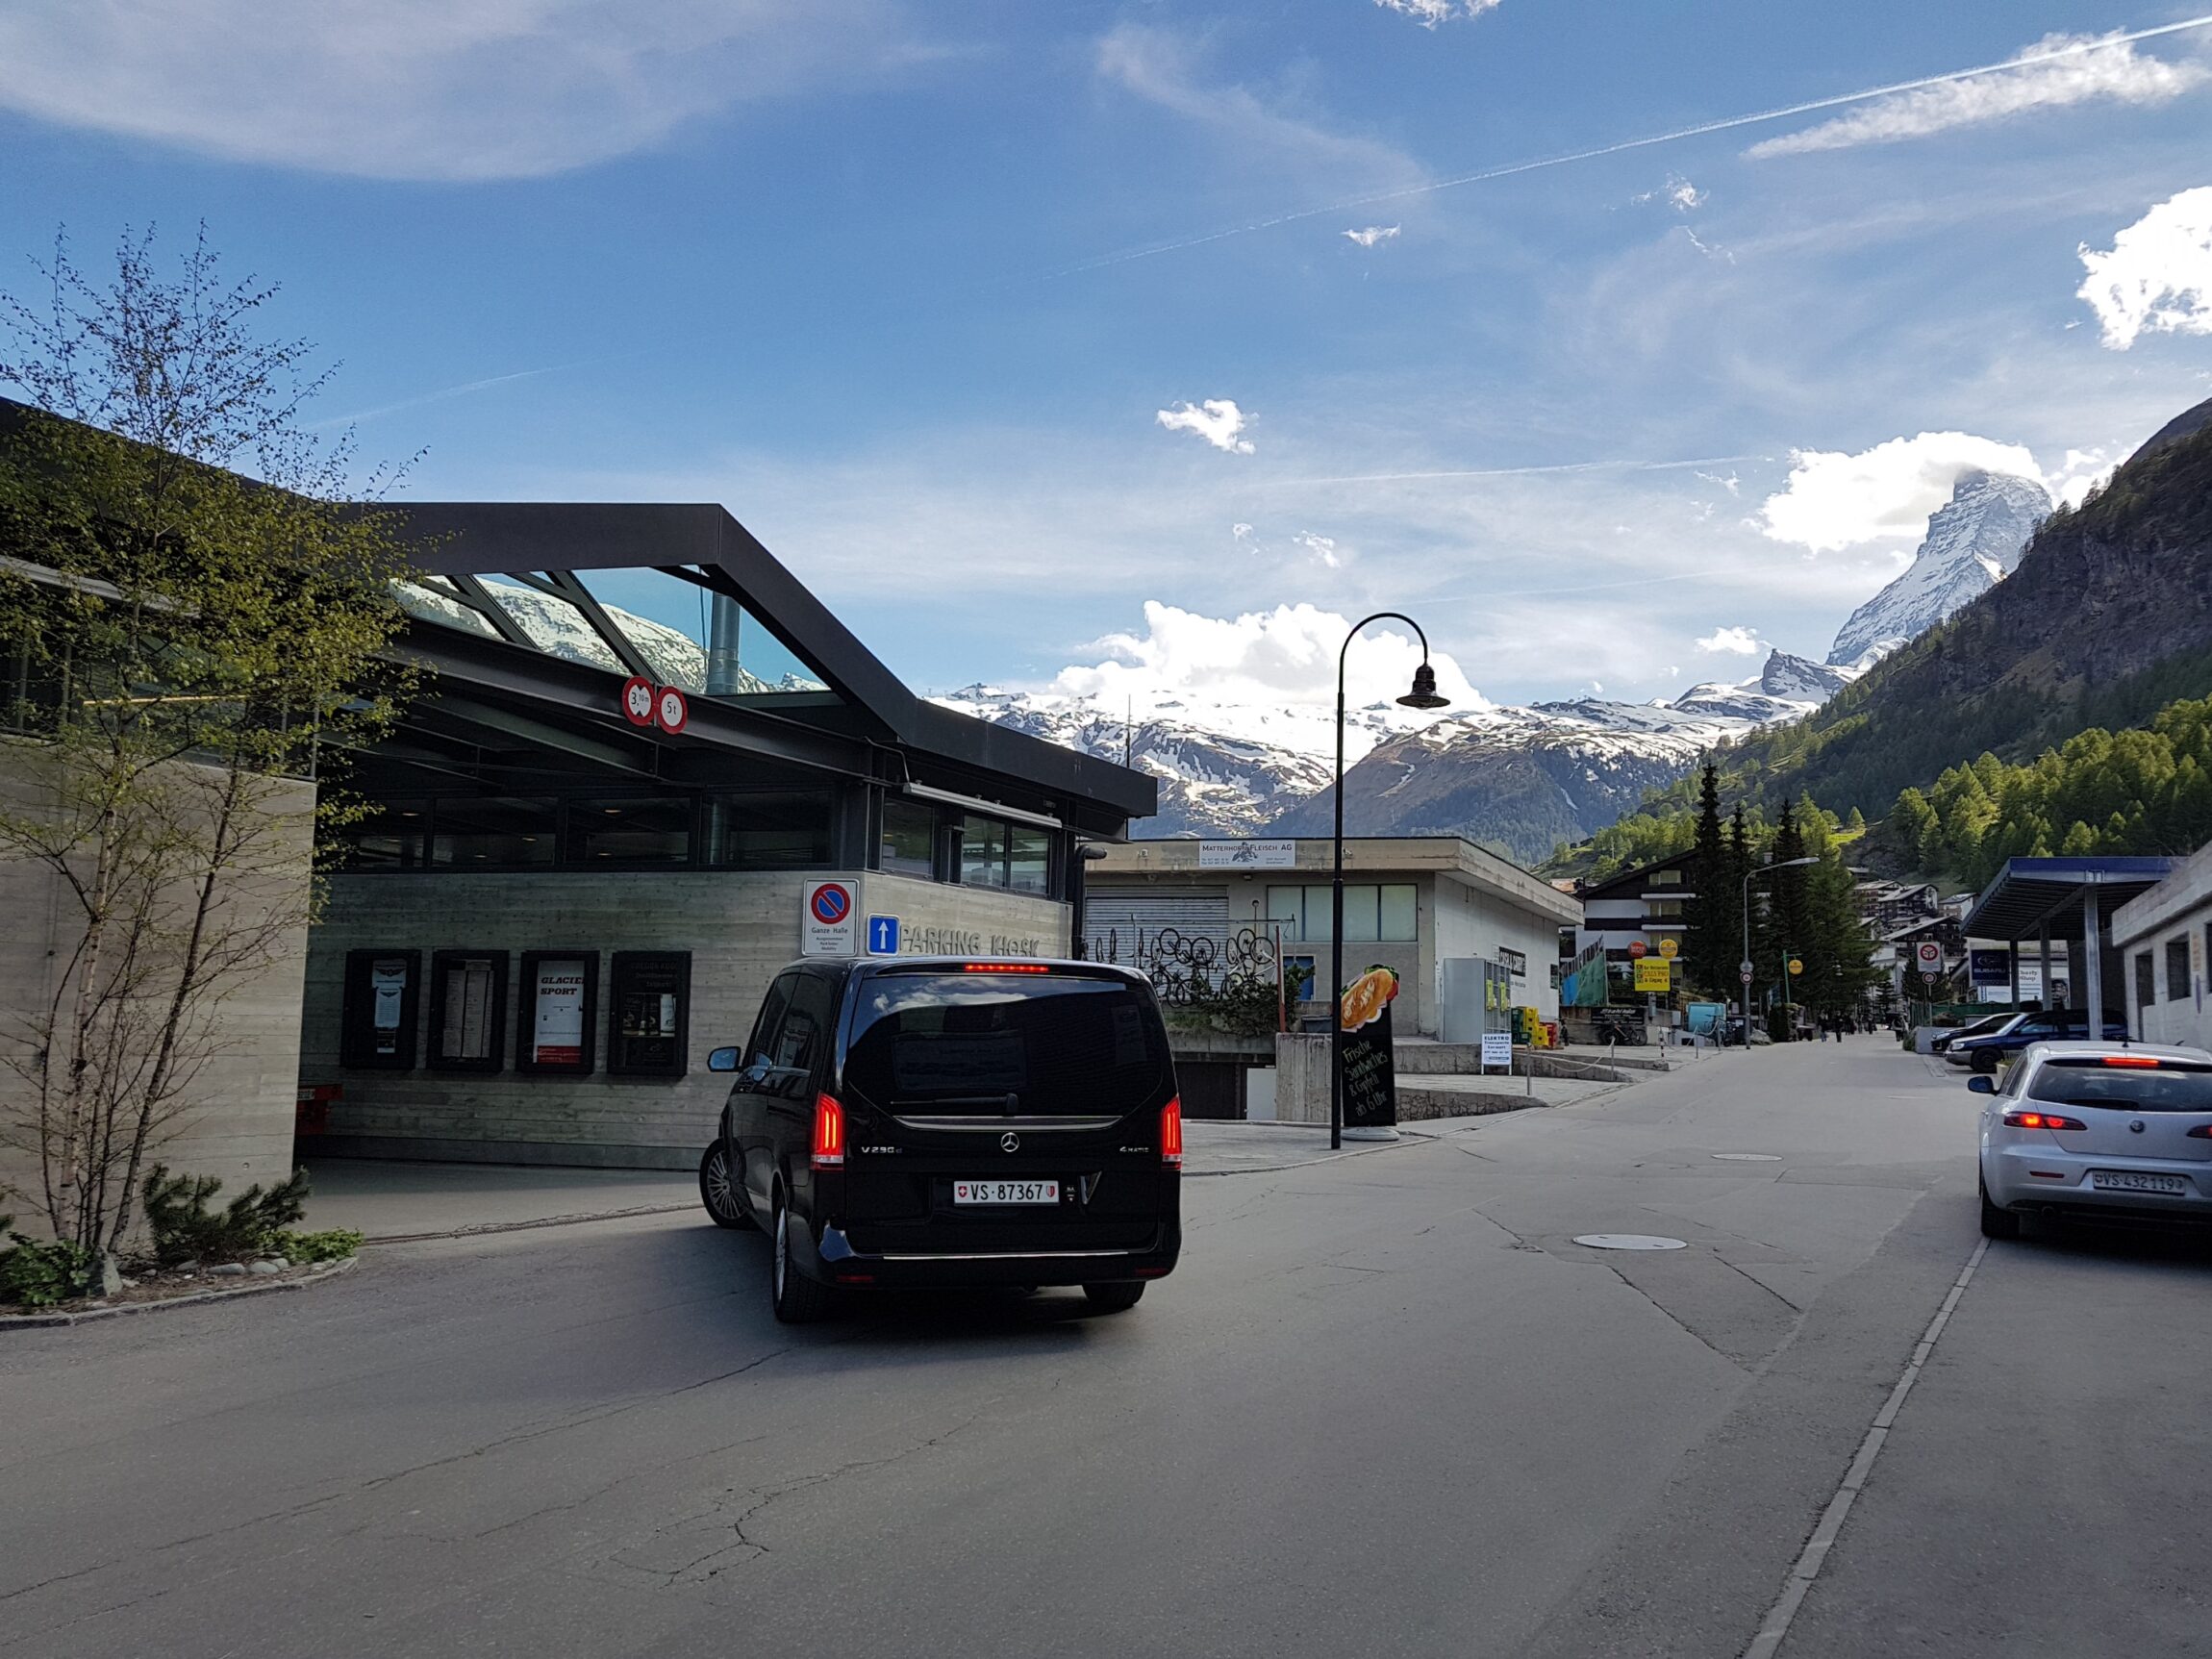 Arrival at entrance of Zermatt